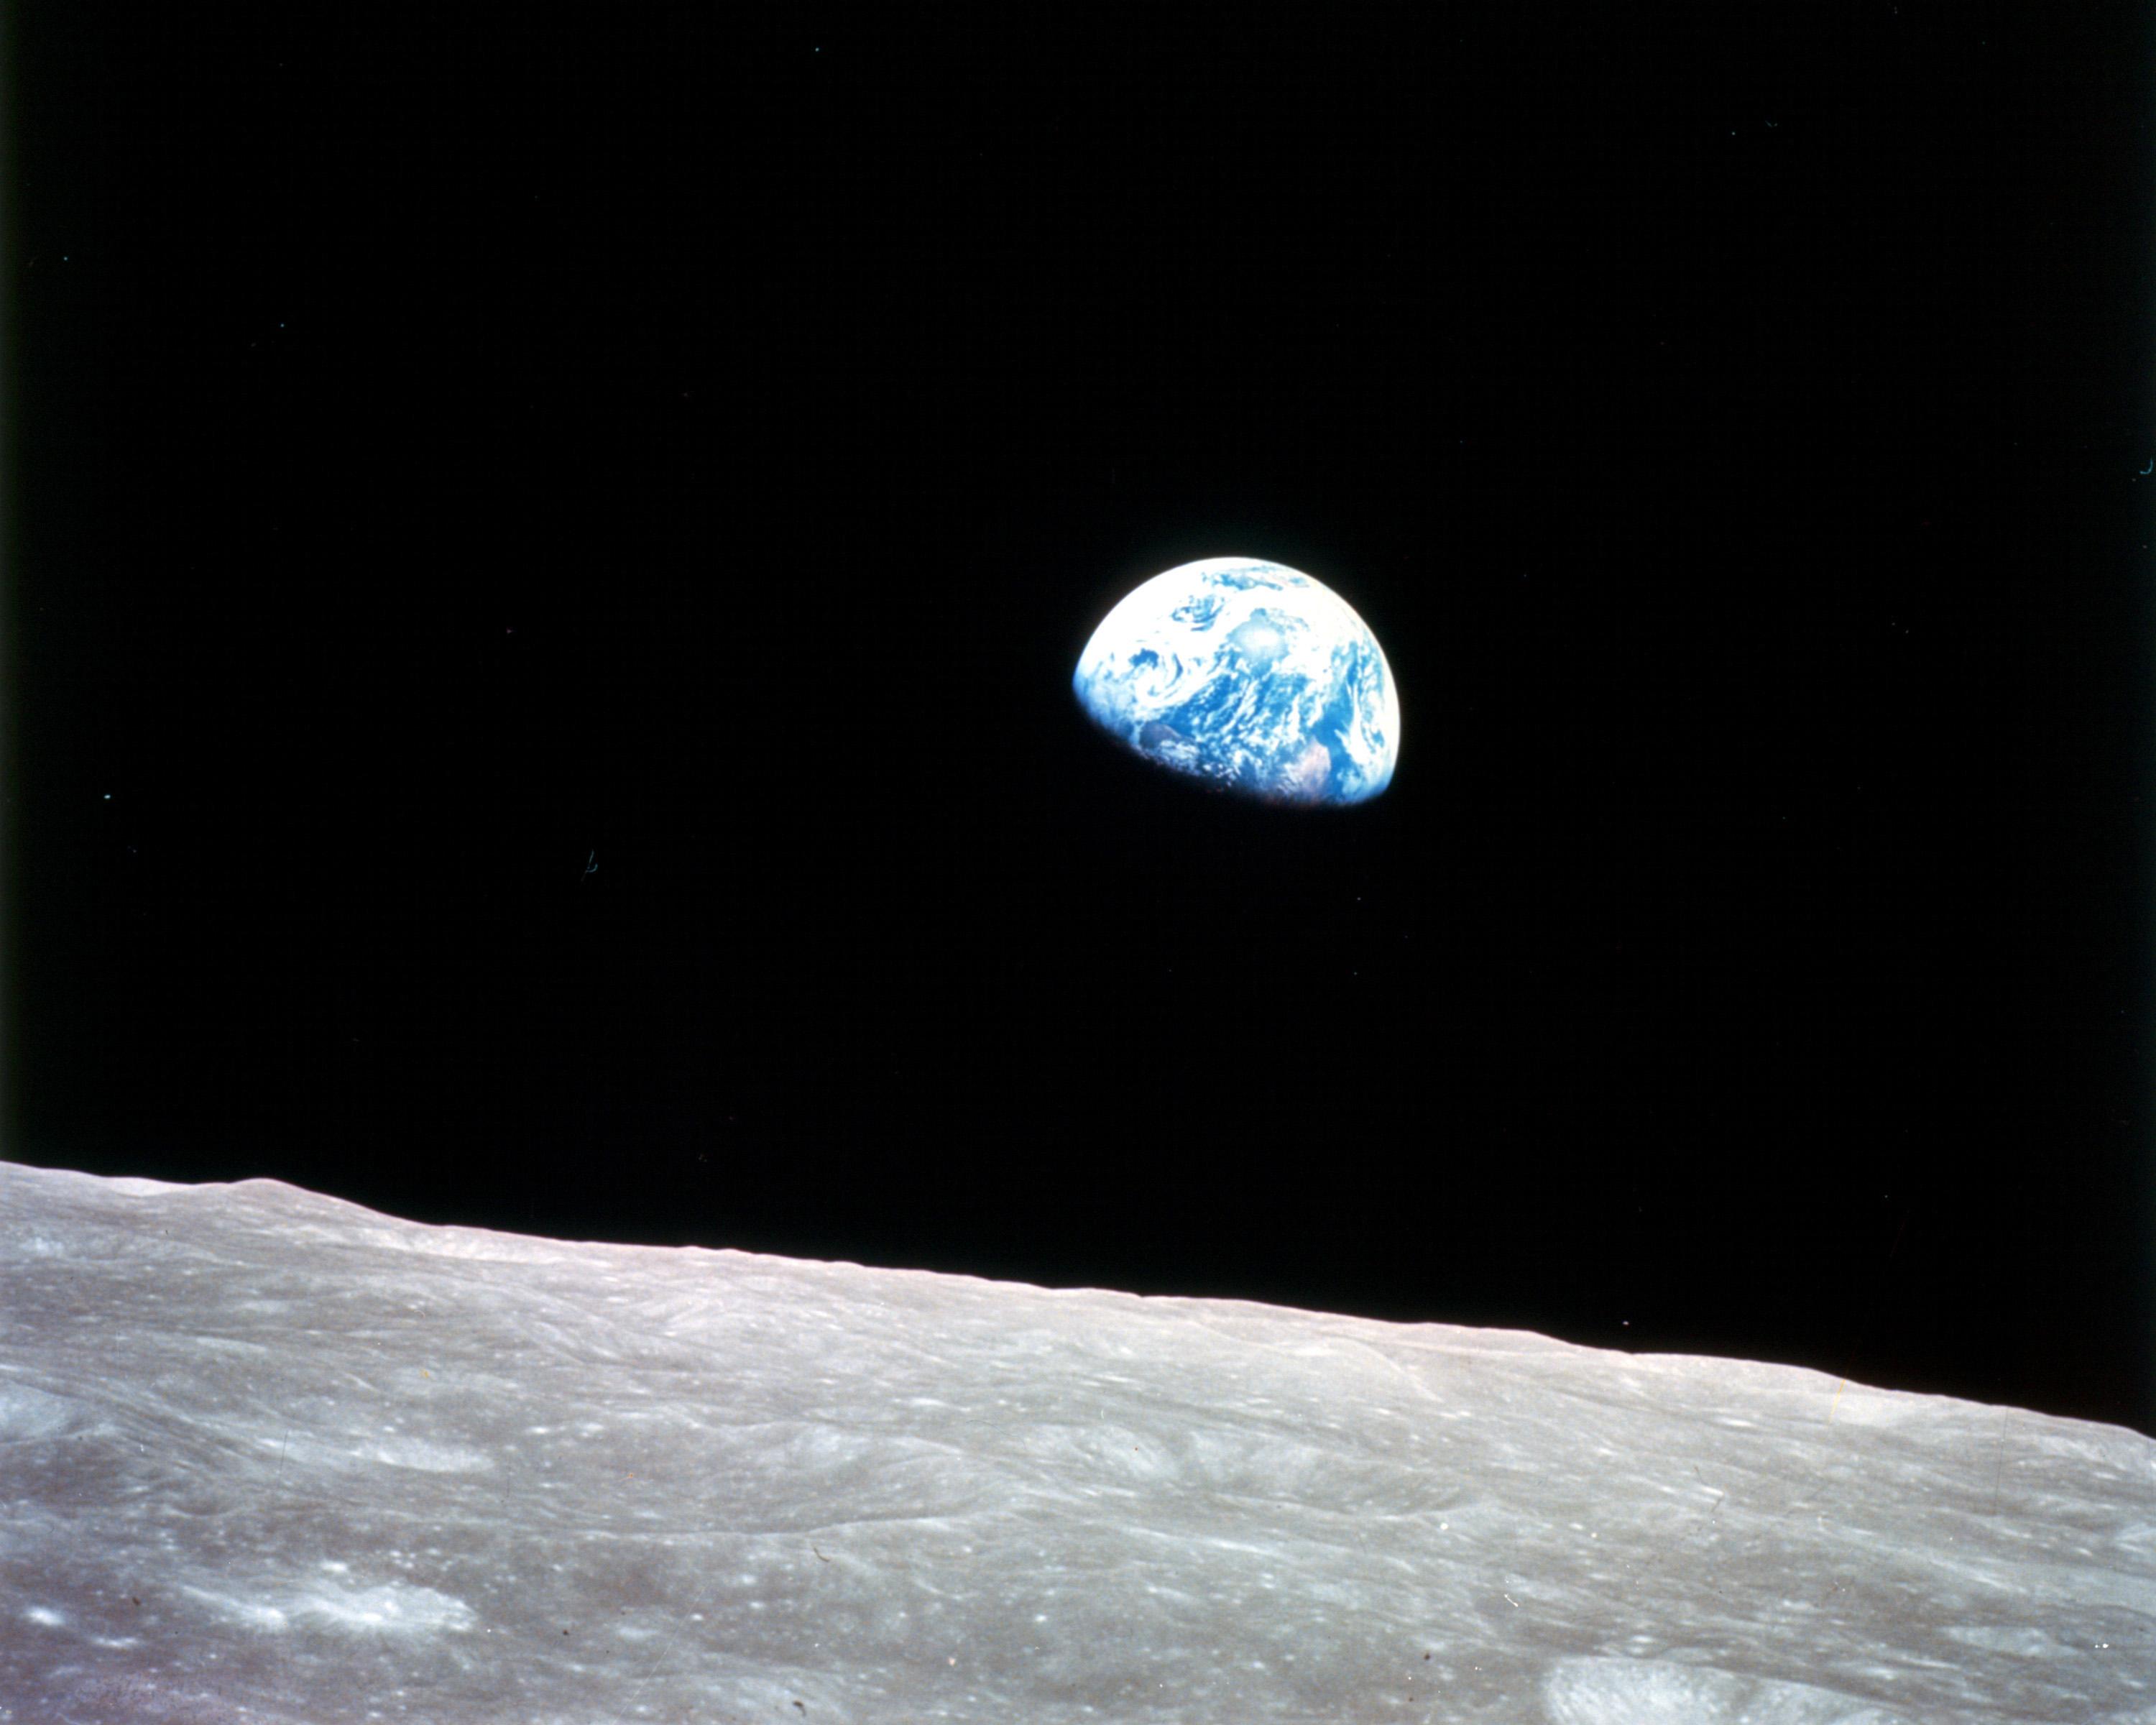 Earthrise by Apollo 8